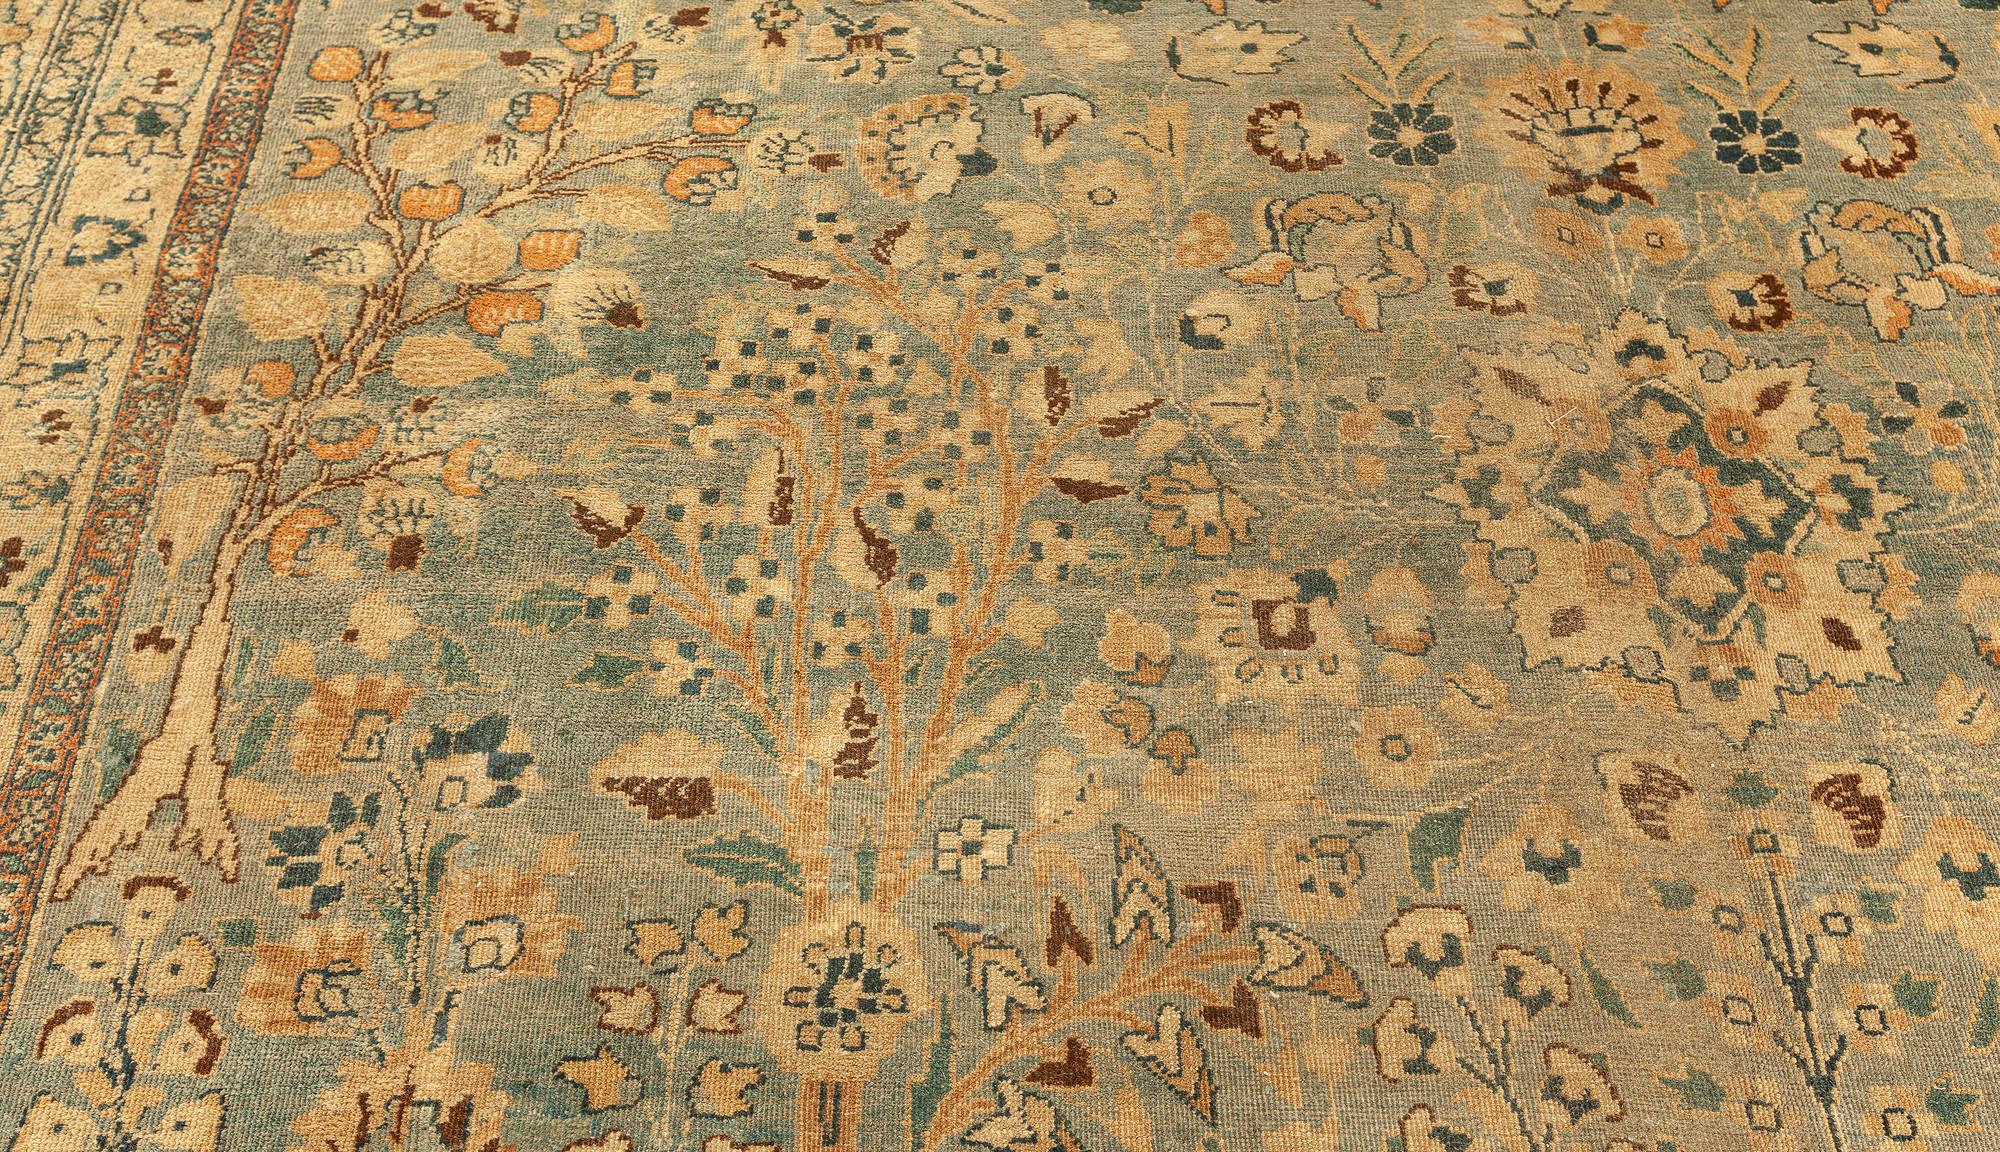 Early 20th Century Persian Khorassan Botanic Handmade Wool Carpet
Size: 9'10